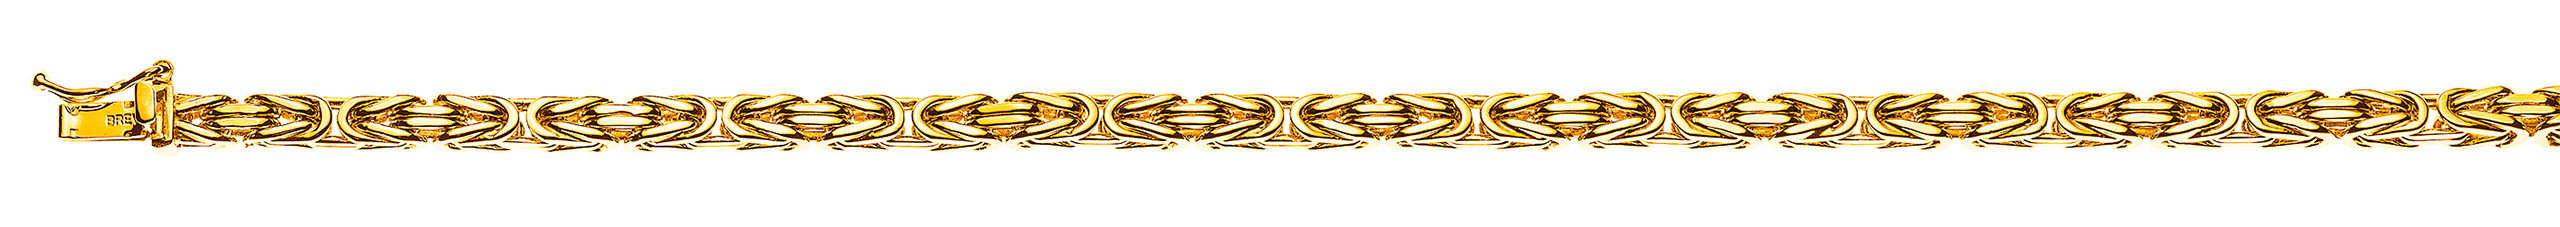 AURONOS Prestige Bracelet 18k yellow gold king chain 3.5mm 19cm 